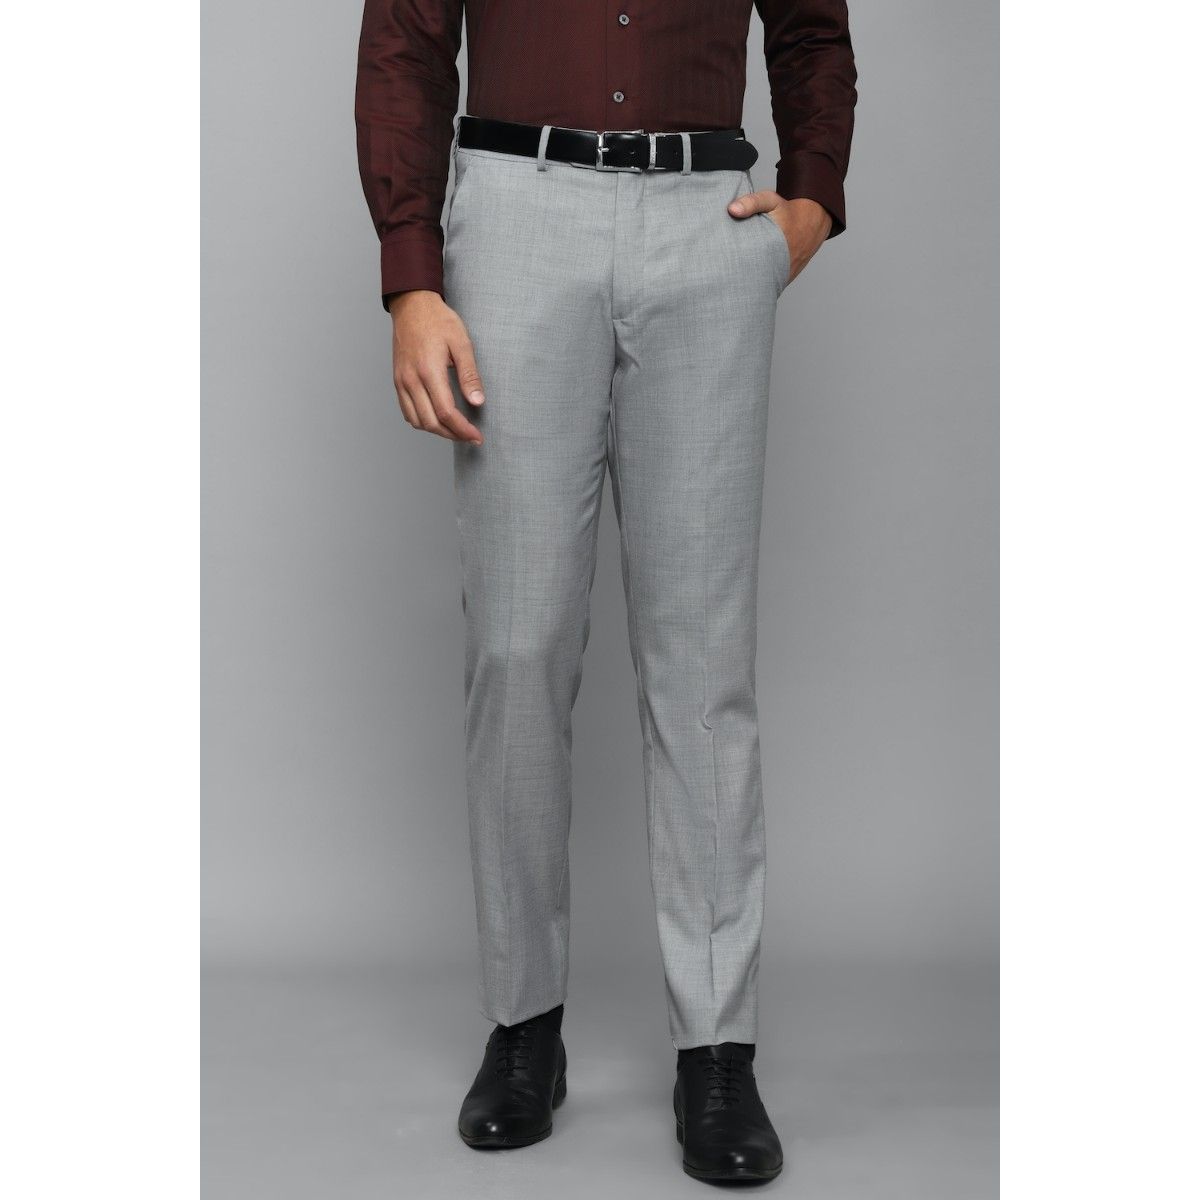 Buy LOUIS PHILIPPE Textured Wool Blend Slim Fit Men's Formal Wear Trousers  | Shoppers Stop